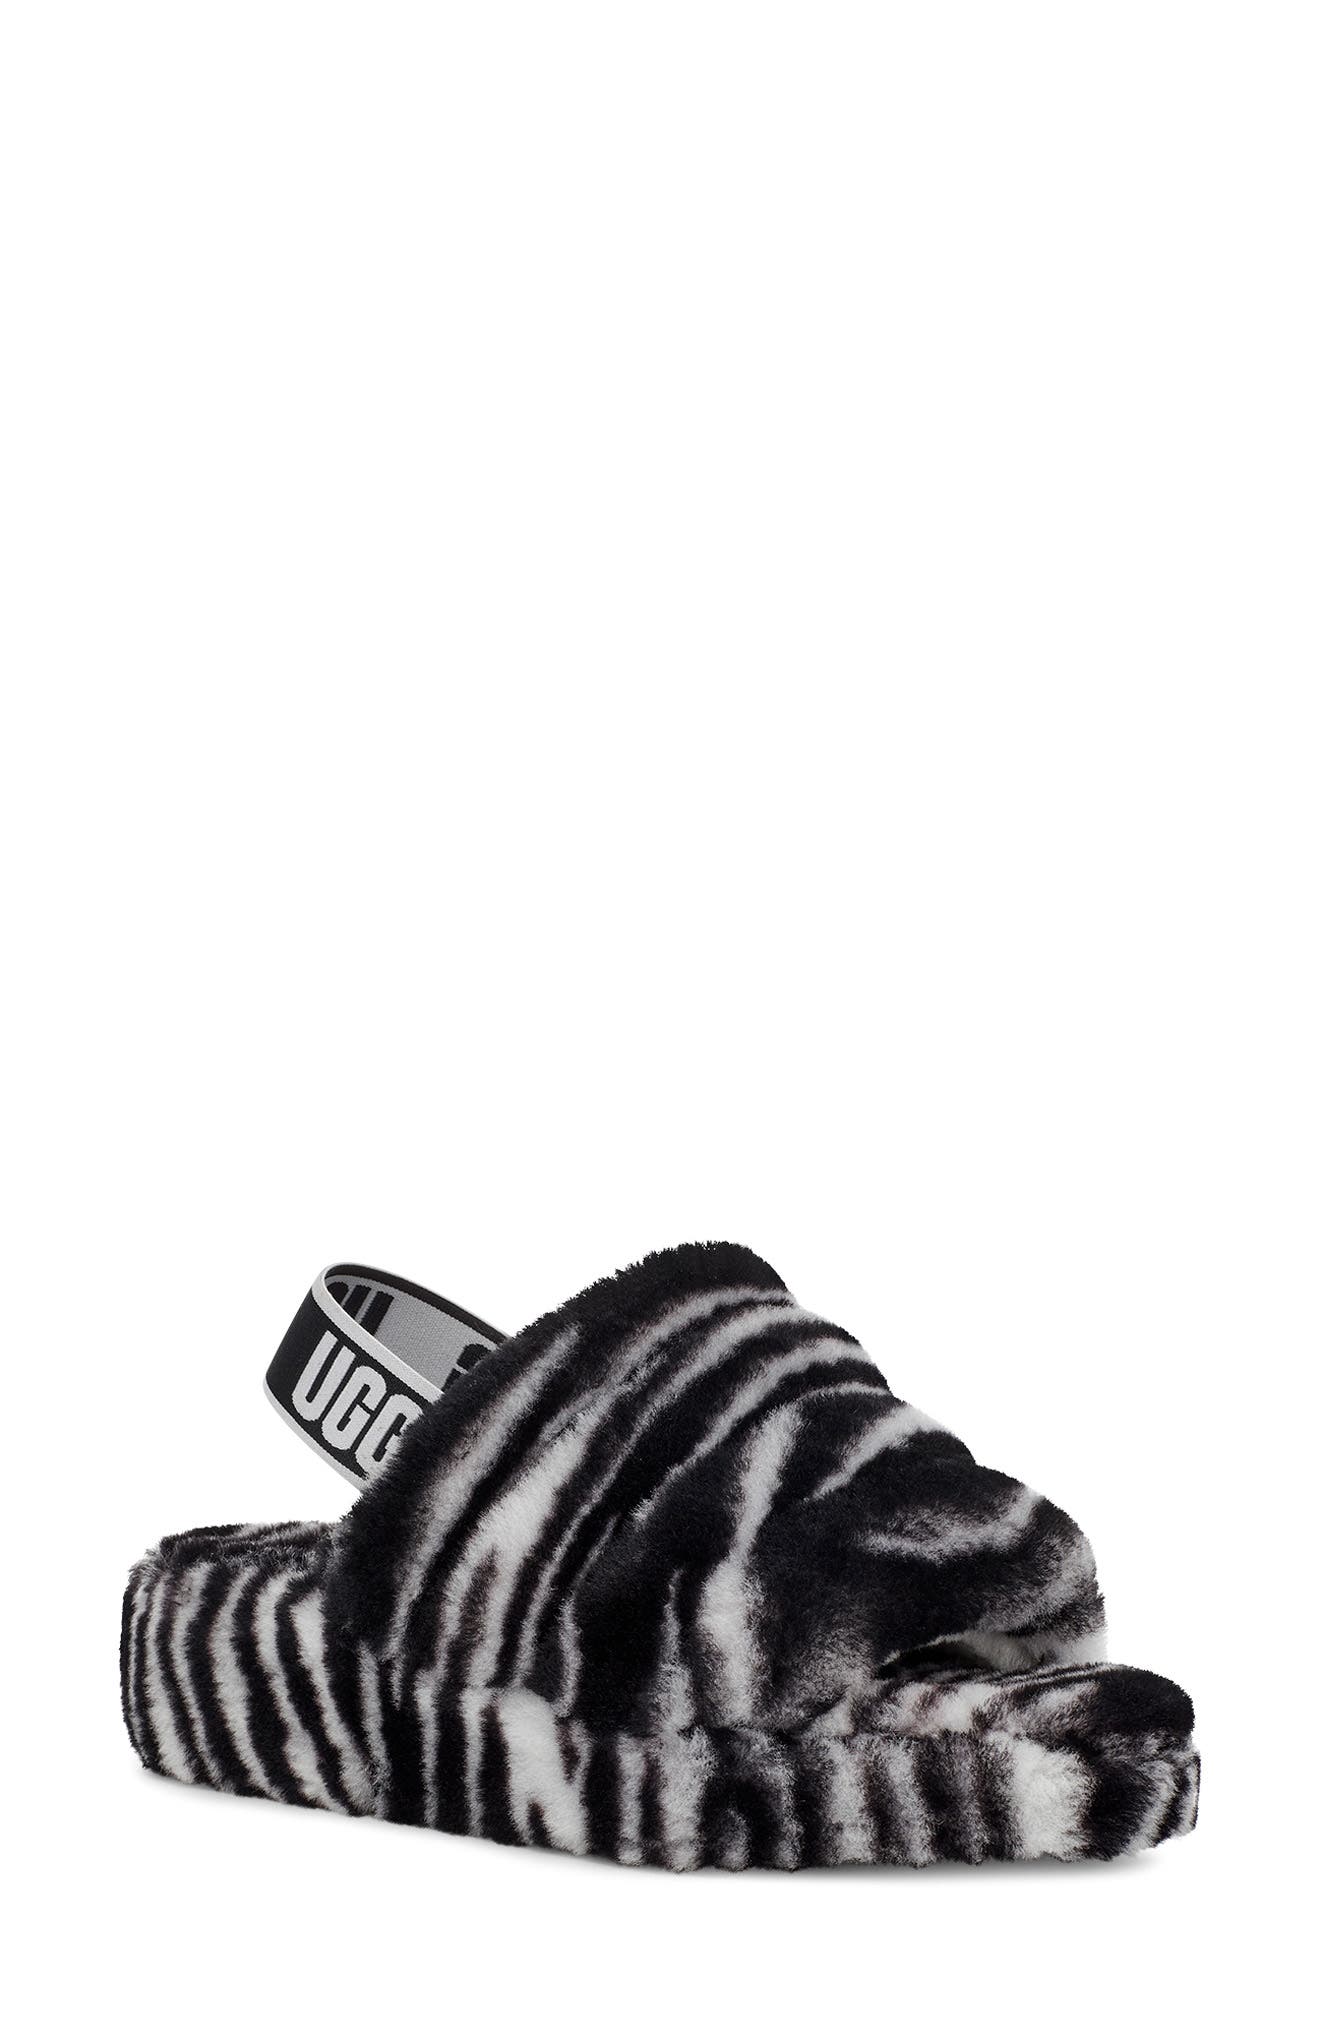 nordstrom yeezy zebra